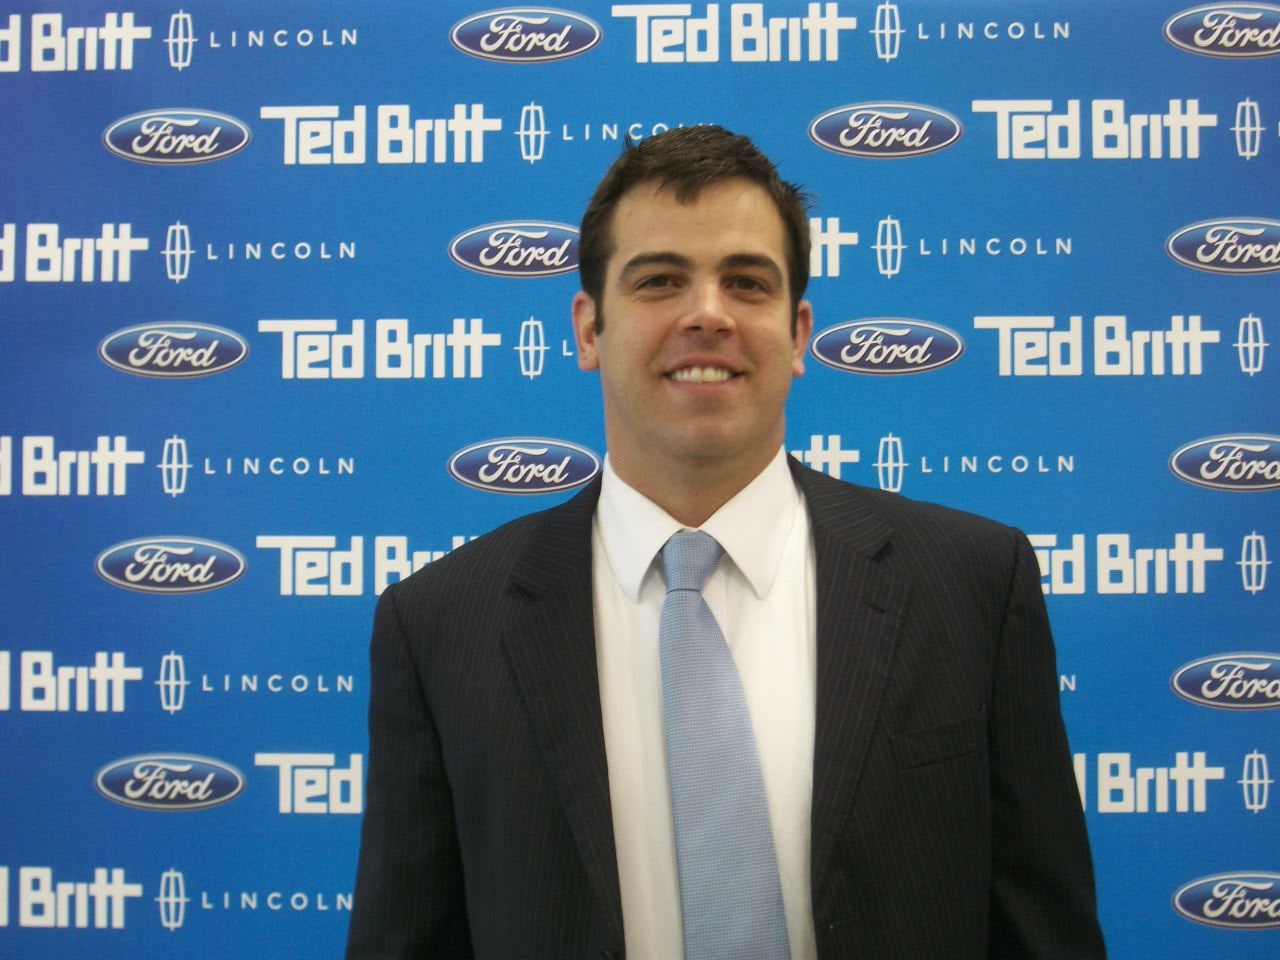 Ted britt ford sales inc #7